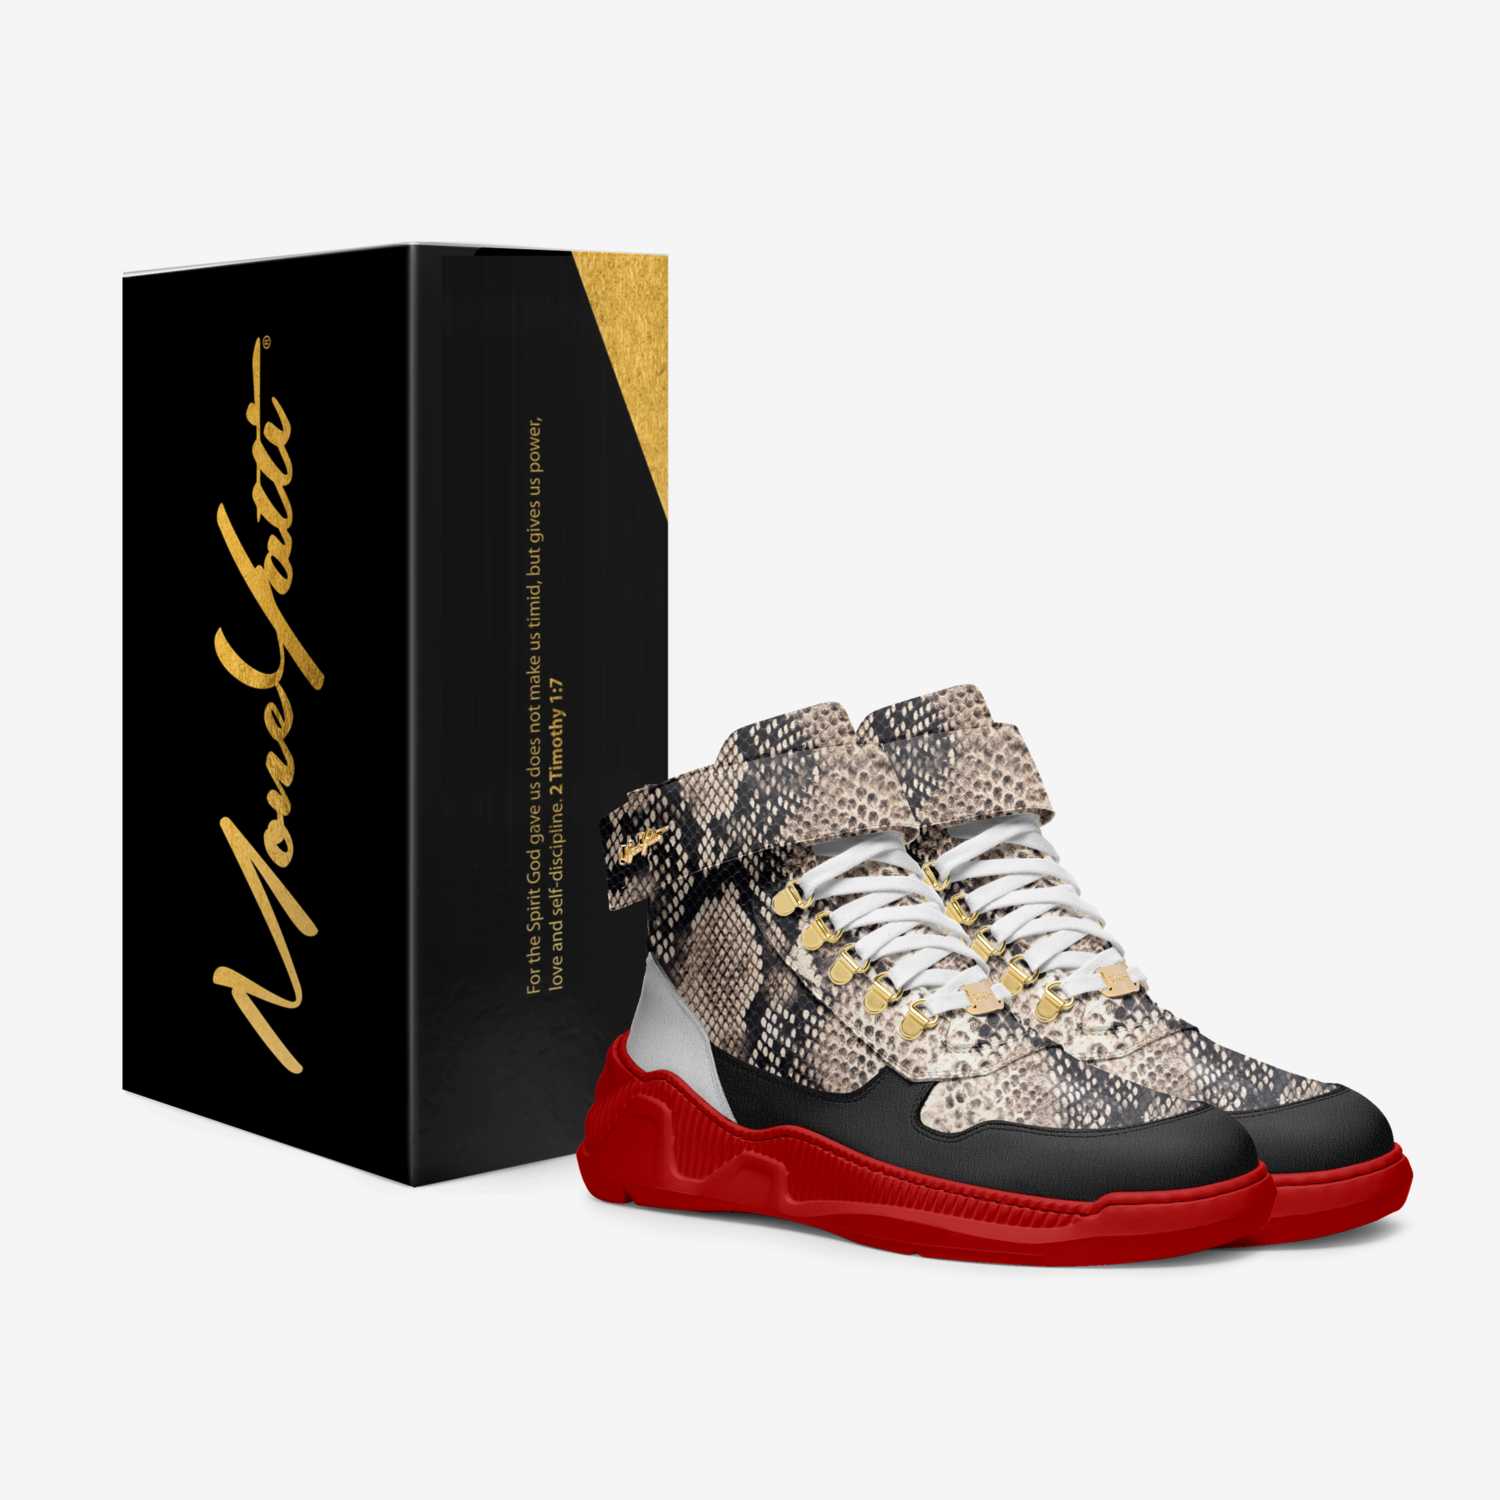 Moneyatti Traps01 custom made in Italy shoes by Moneyatti Brand | Box view